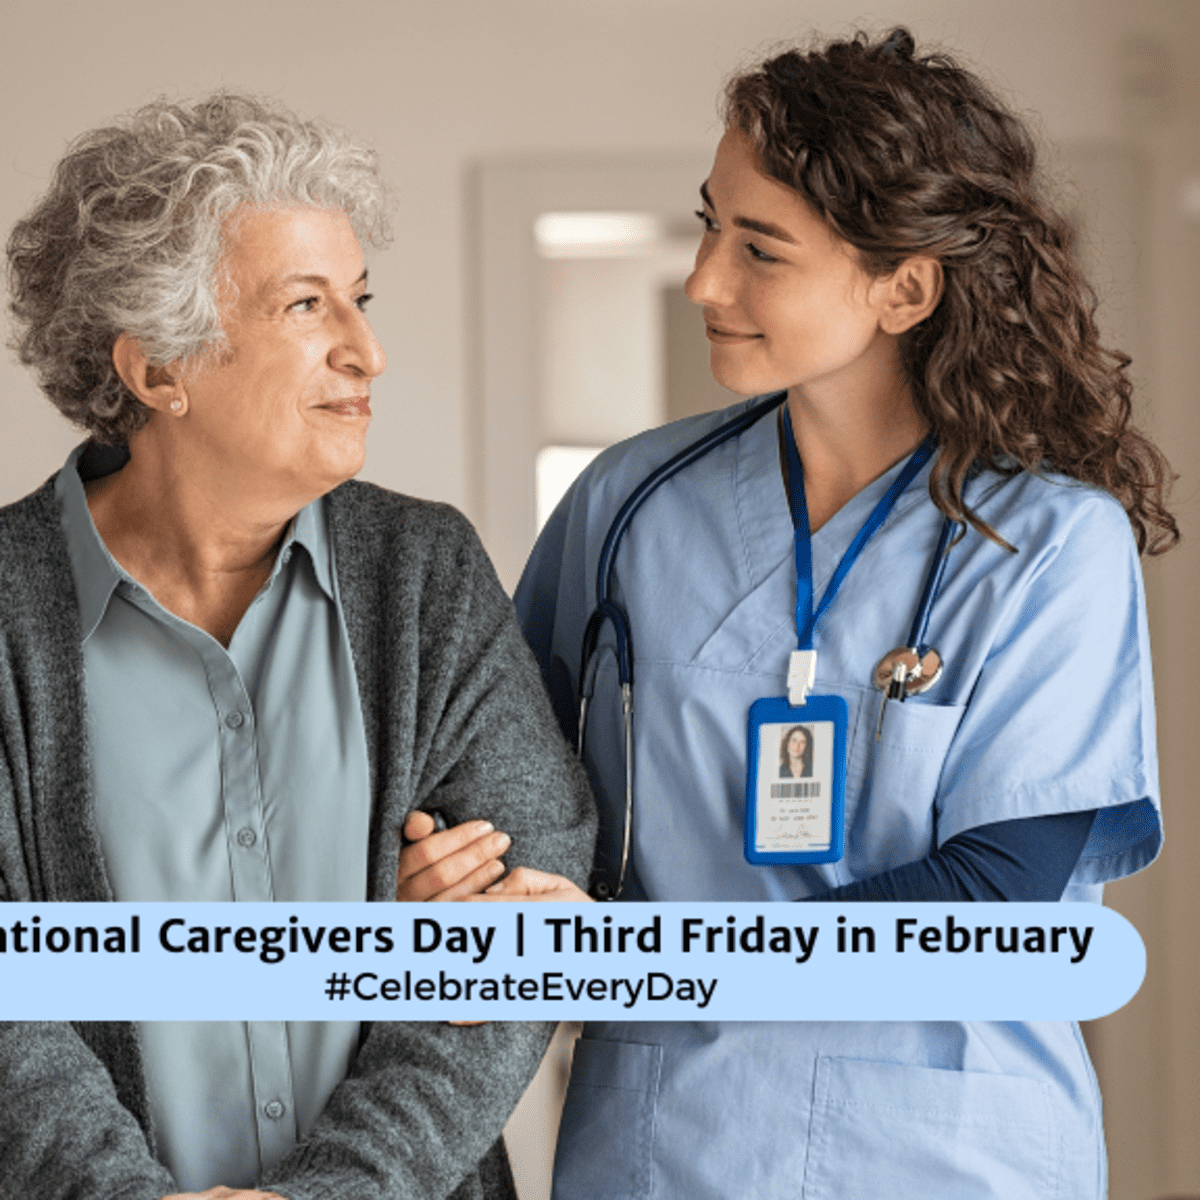 Caregiver Job in Canada